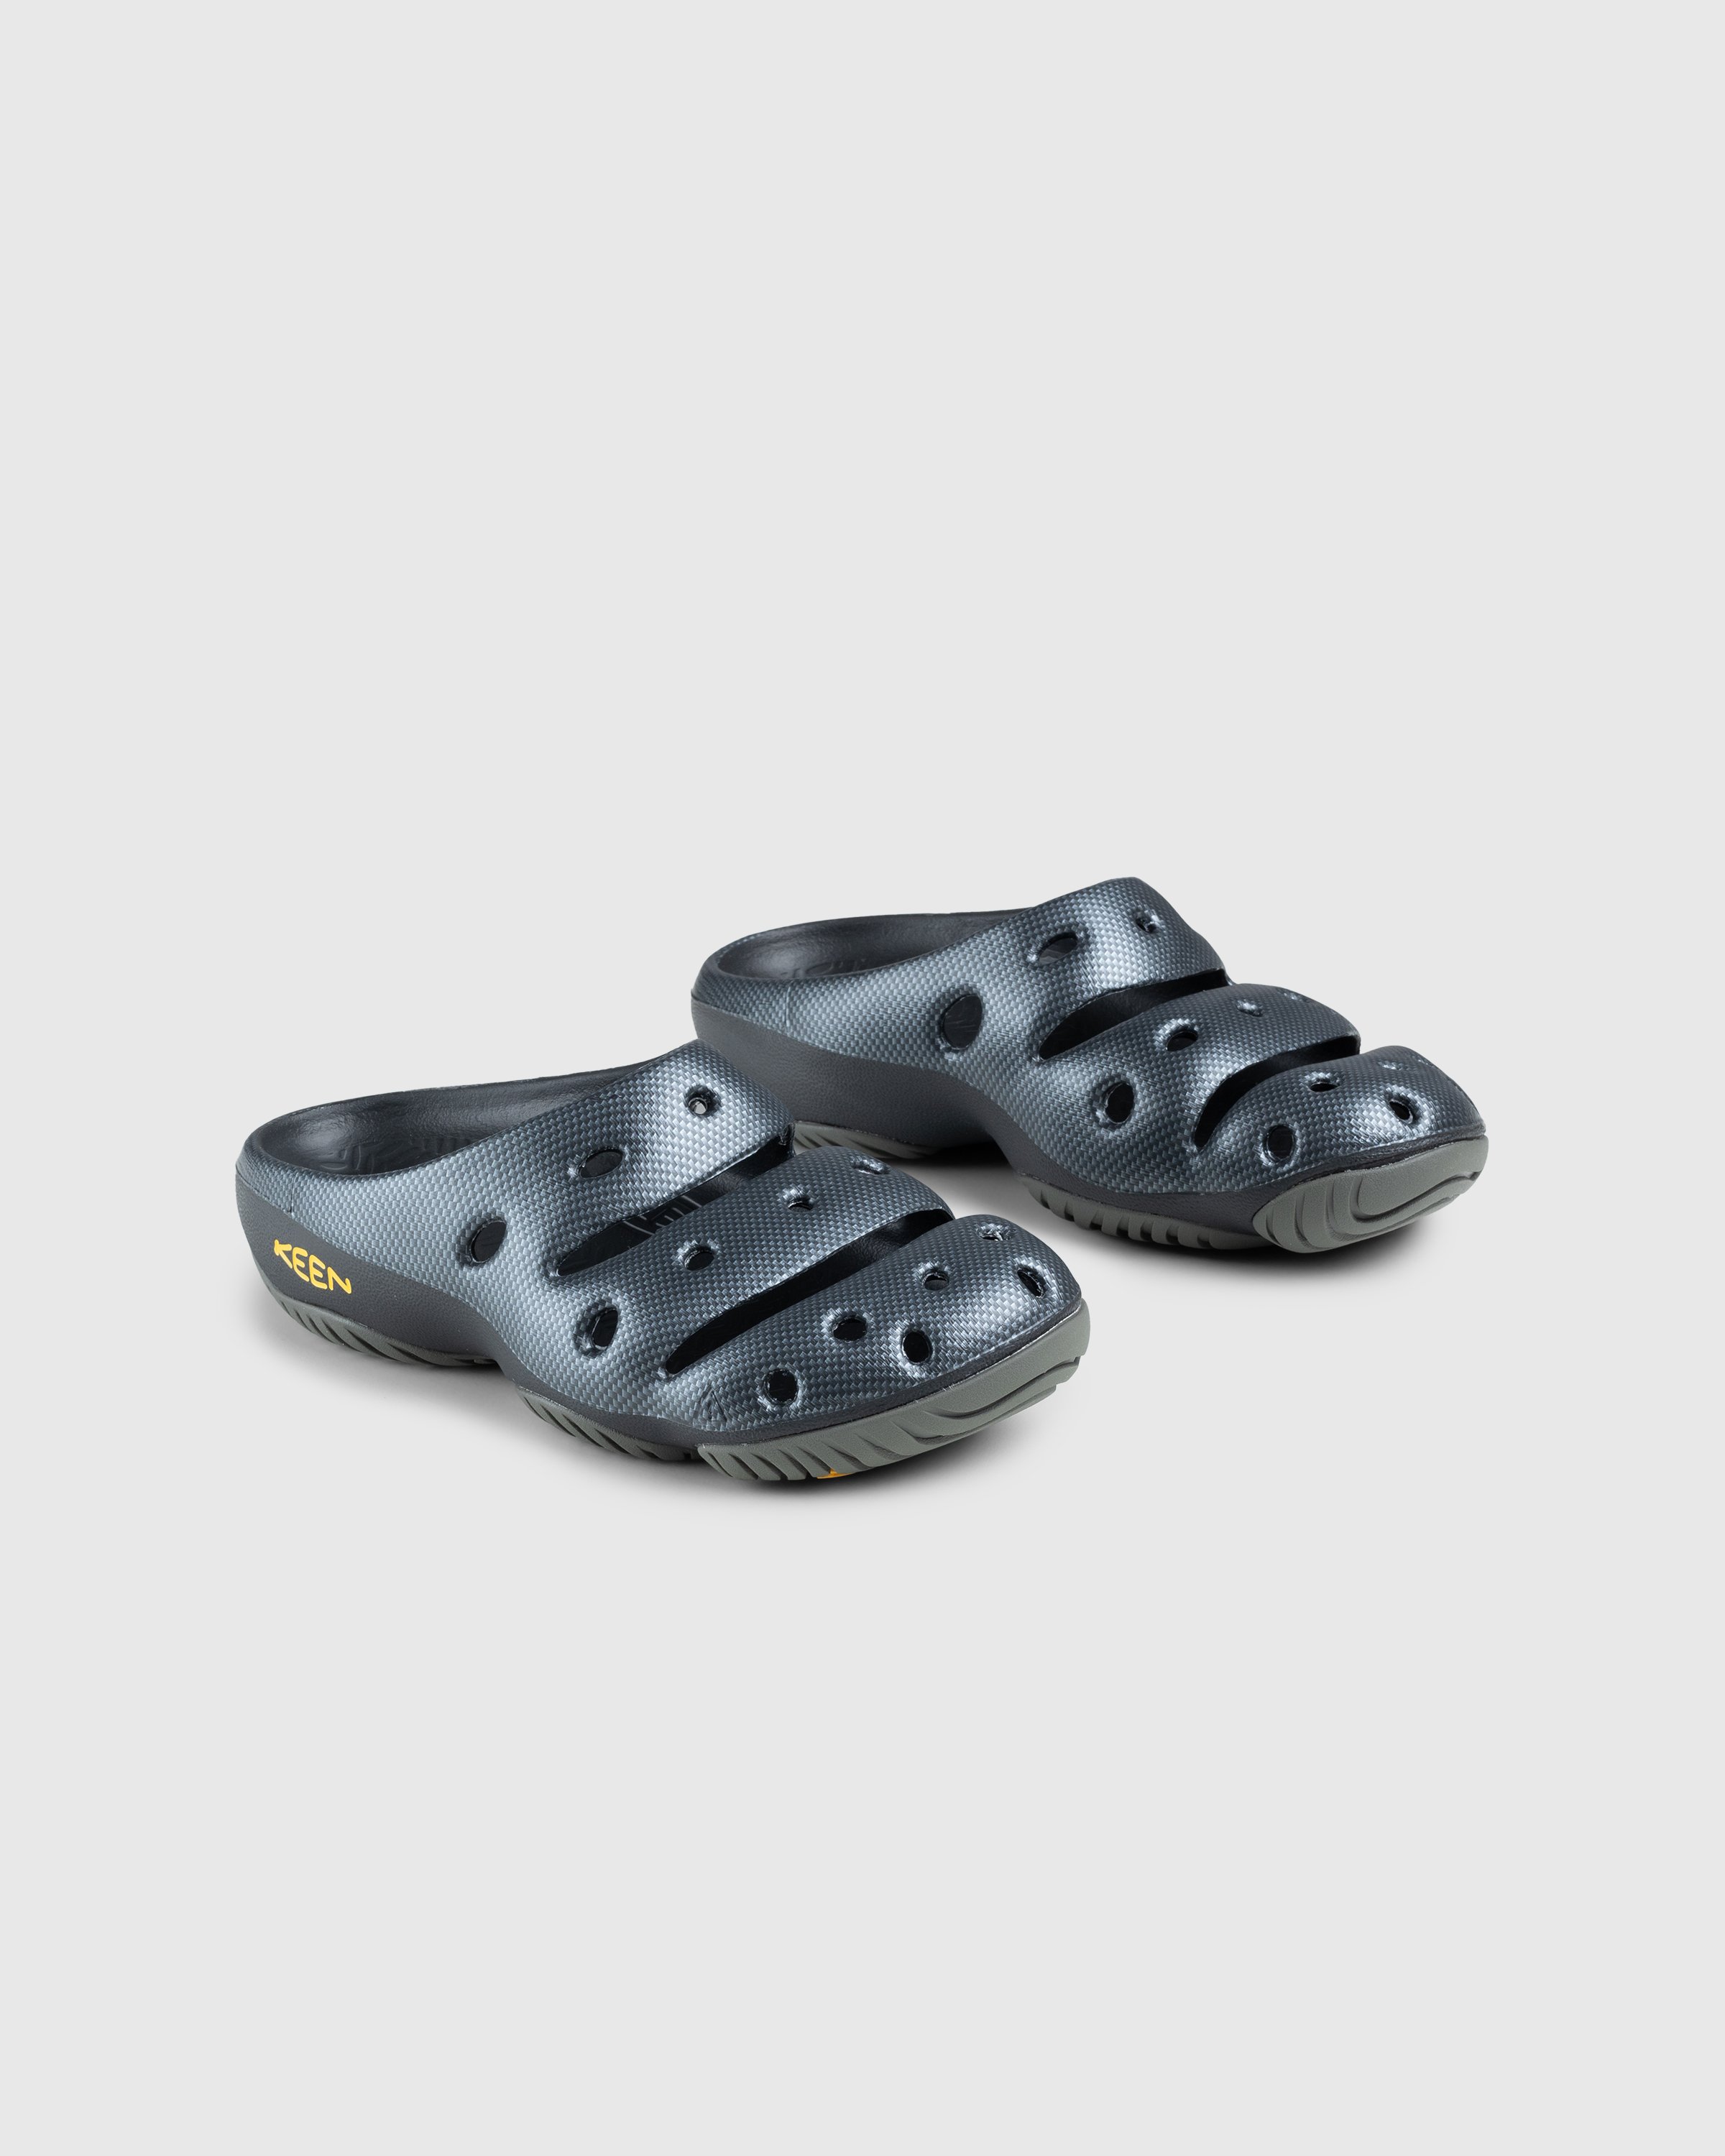 Keen - Yogui Arts Graphite - Footwear - Grey - Image 3